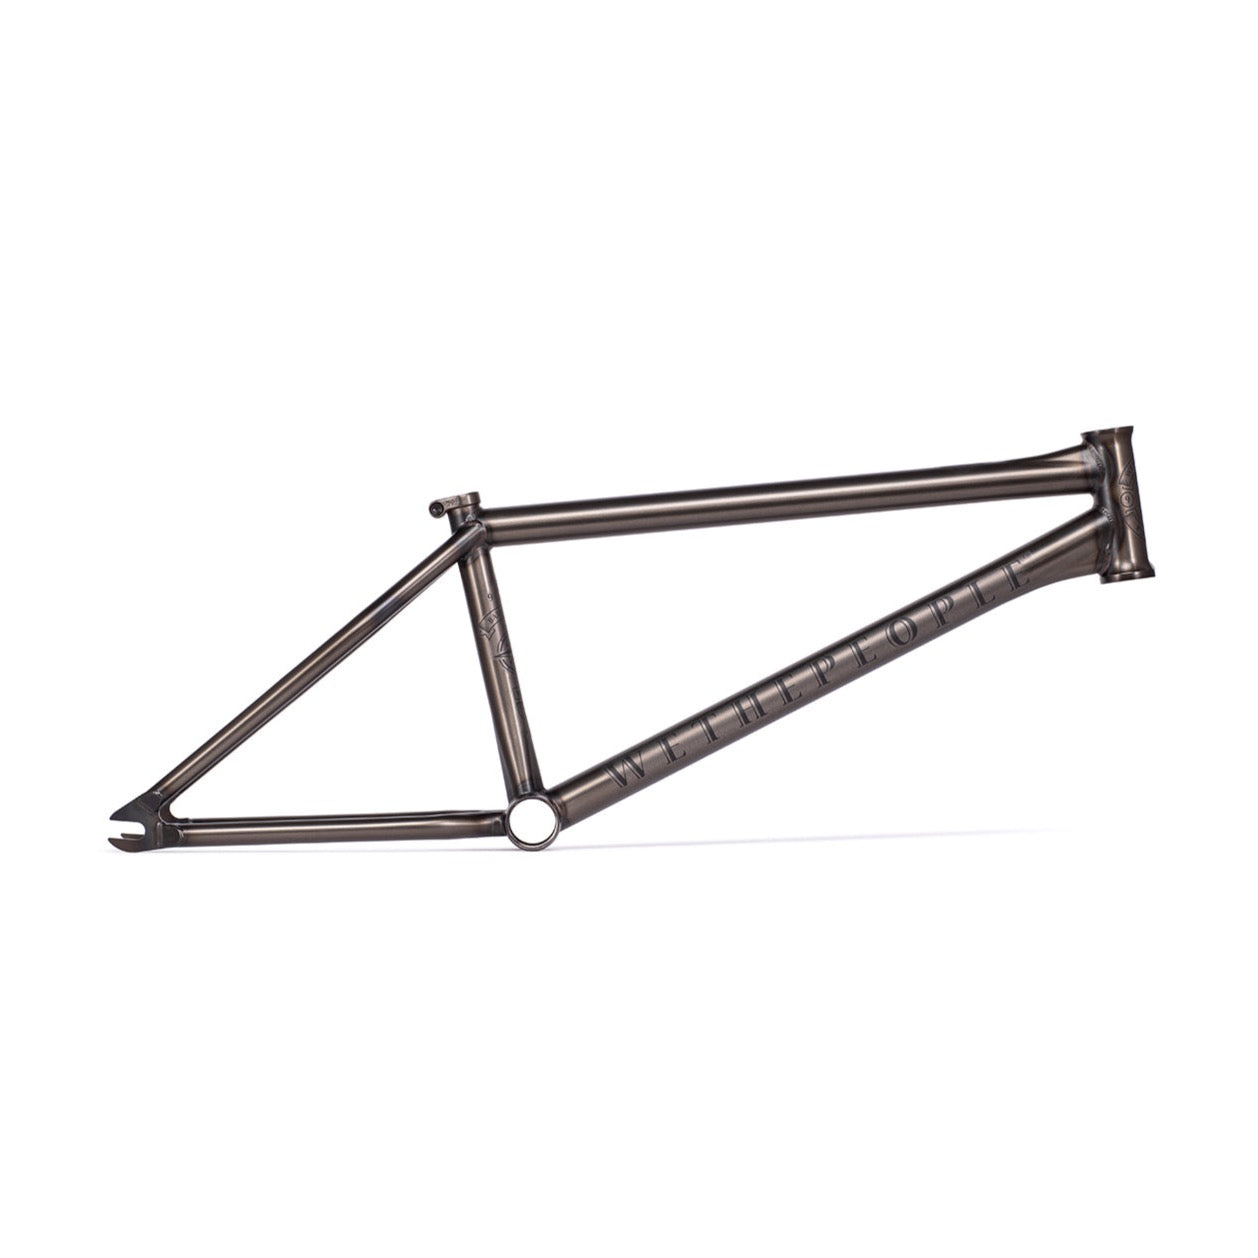 BMX Bike Parts: Steering, Drivetrain, Seating, Wheels & Rims